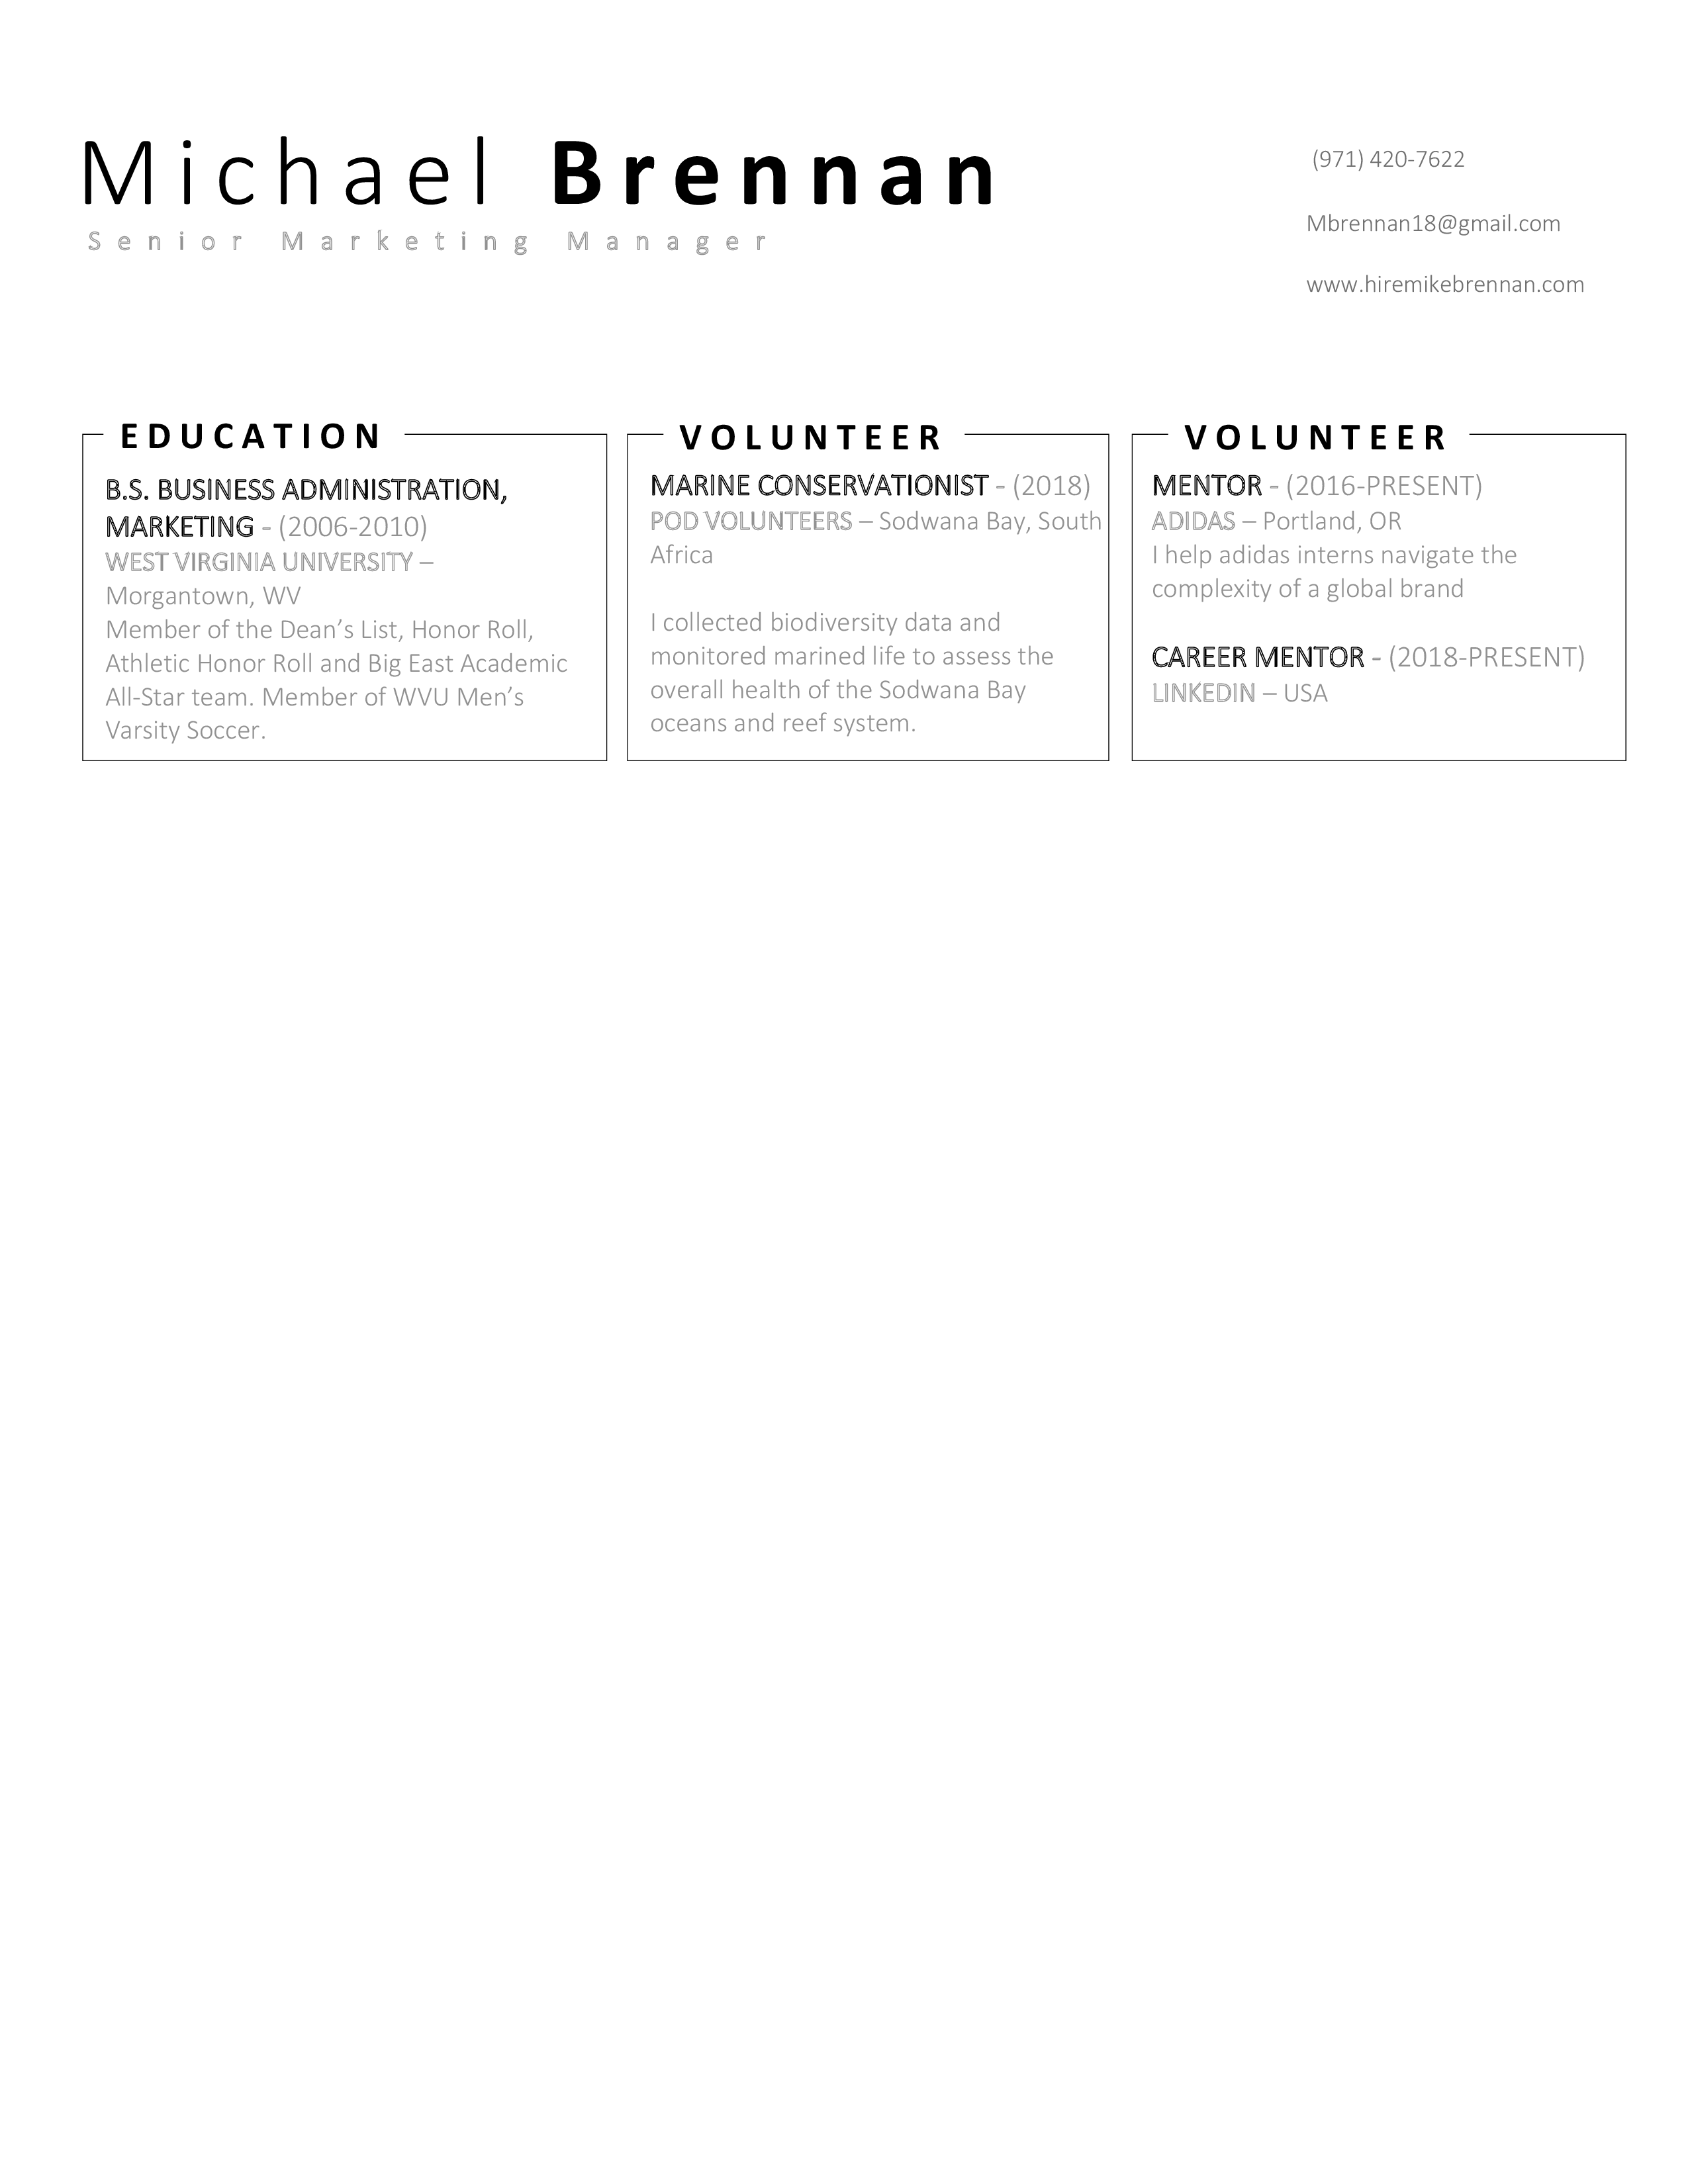 michaelbrennan-resume-page-1